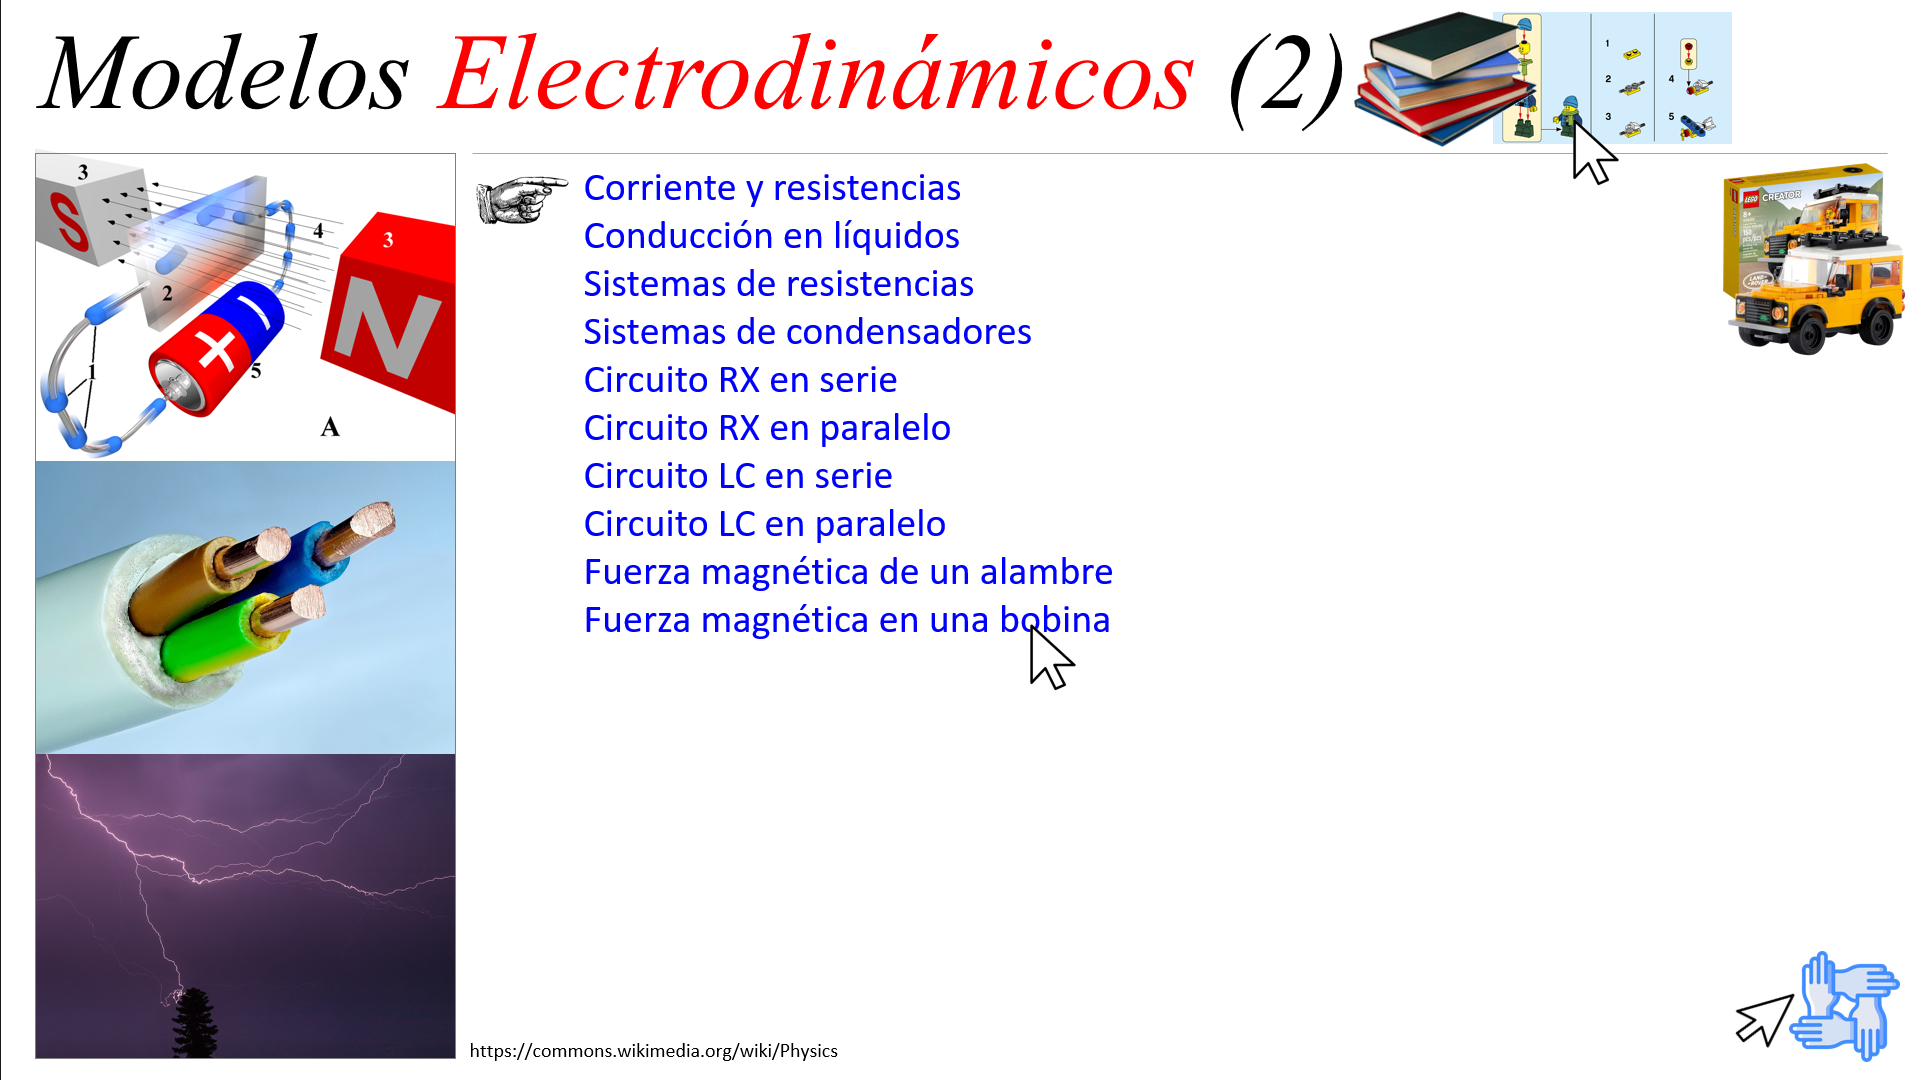 Modelos Electrodinámicos (2)